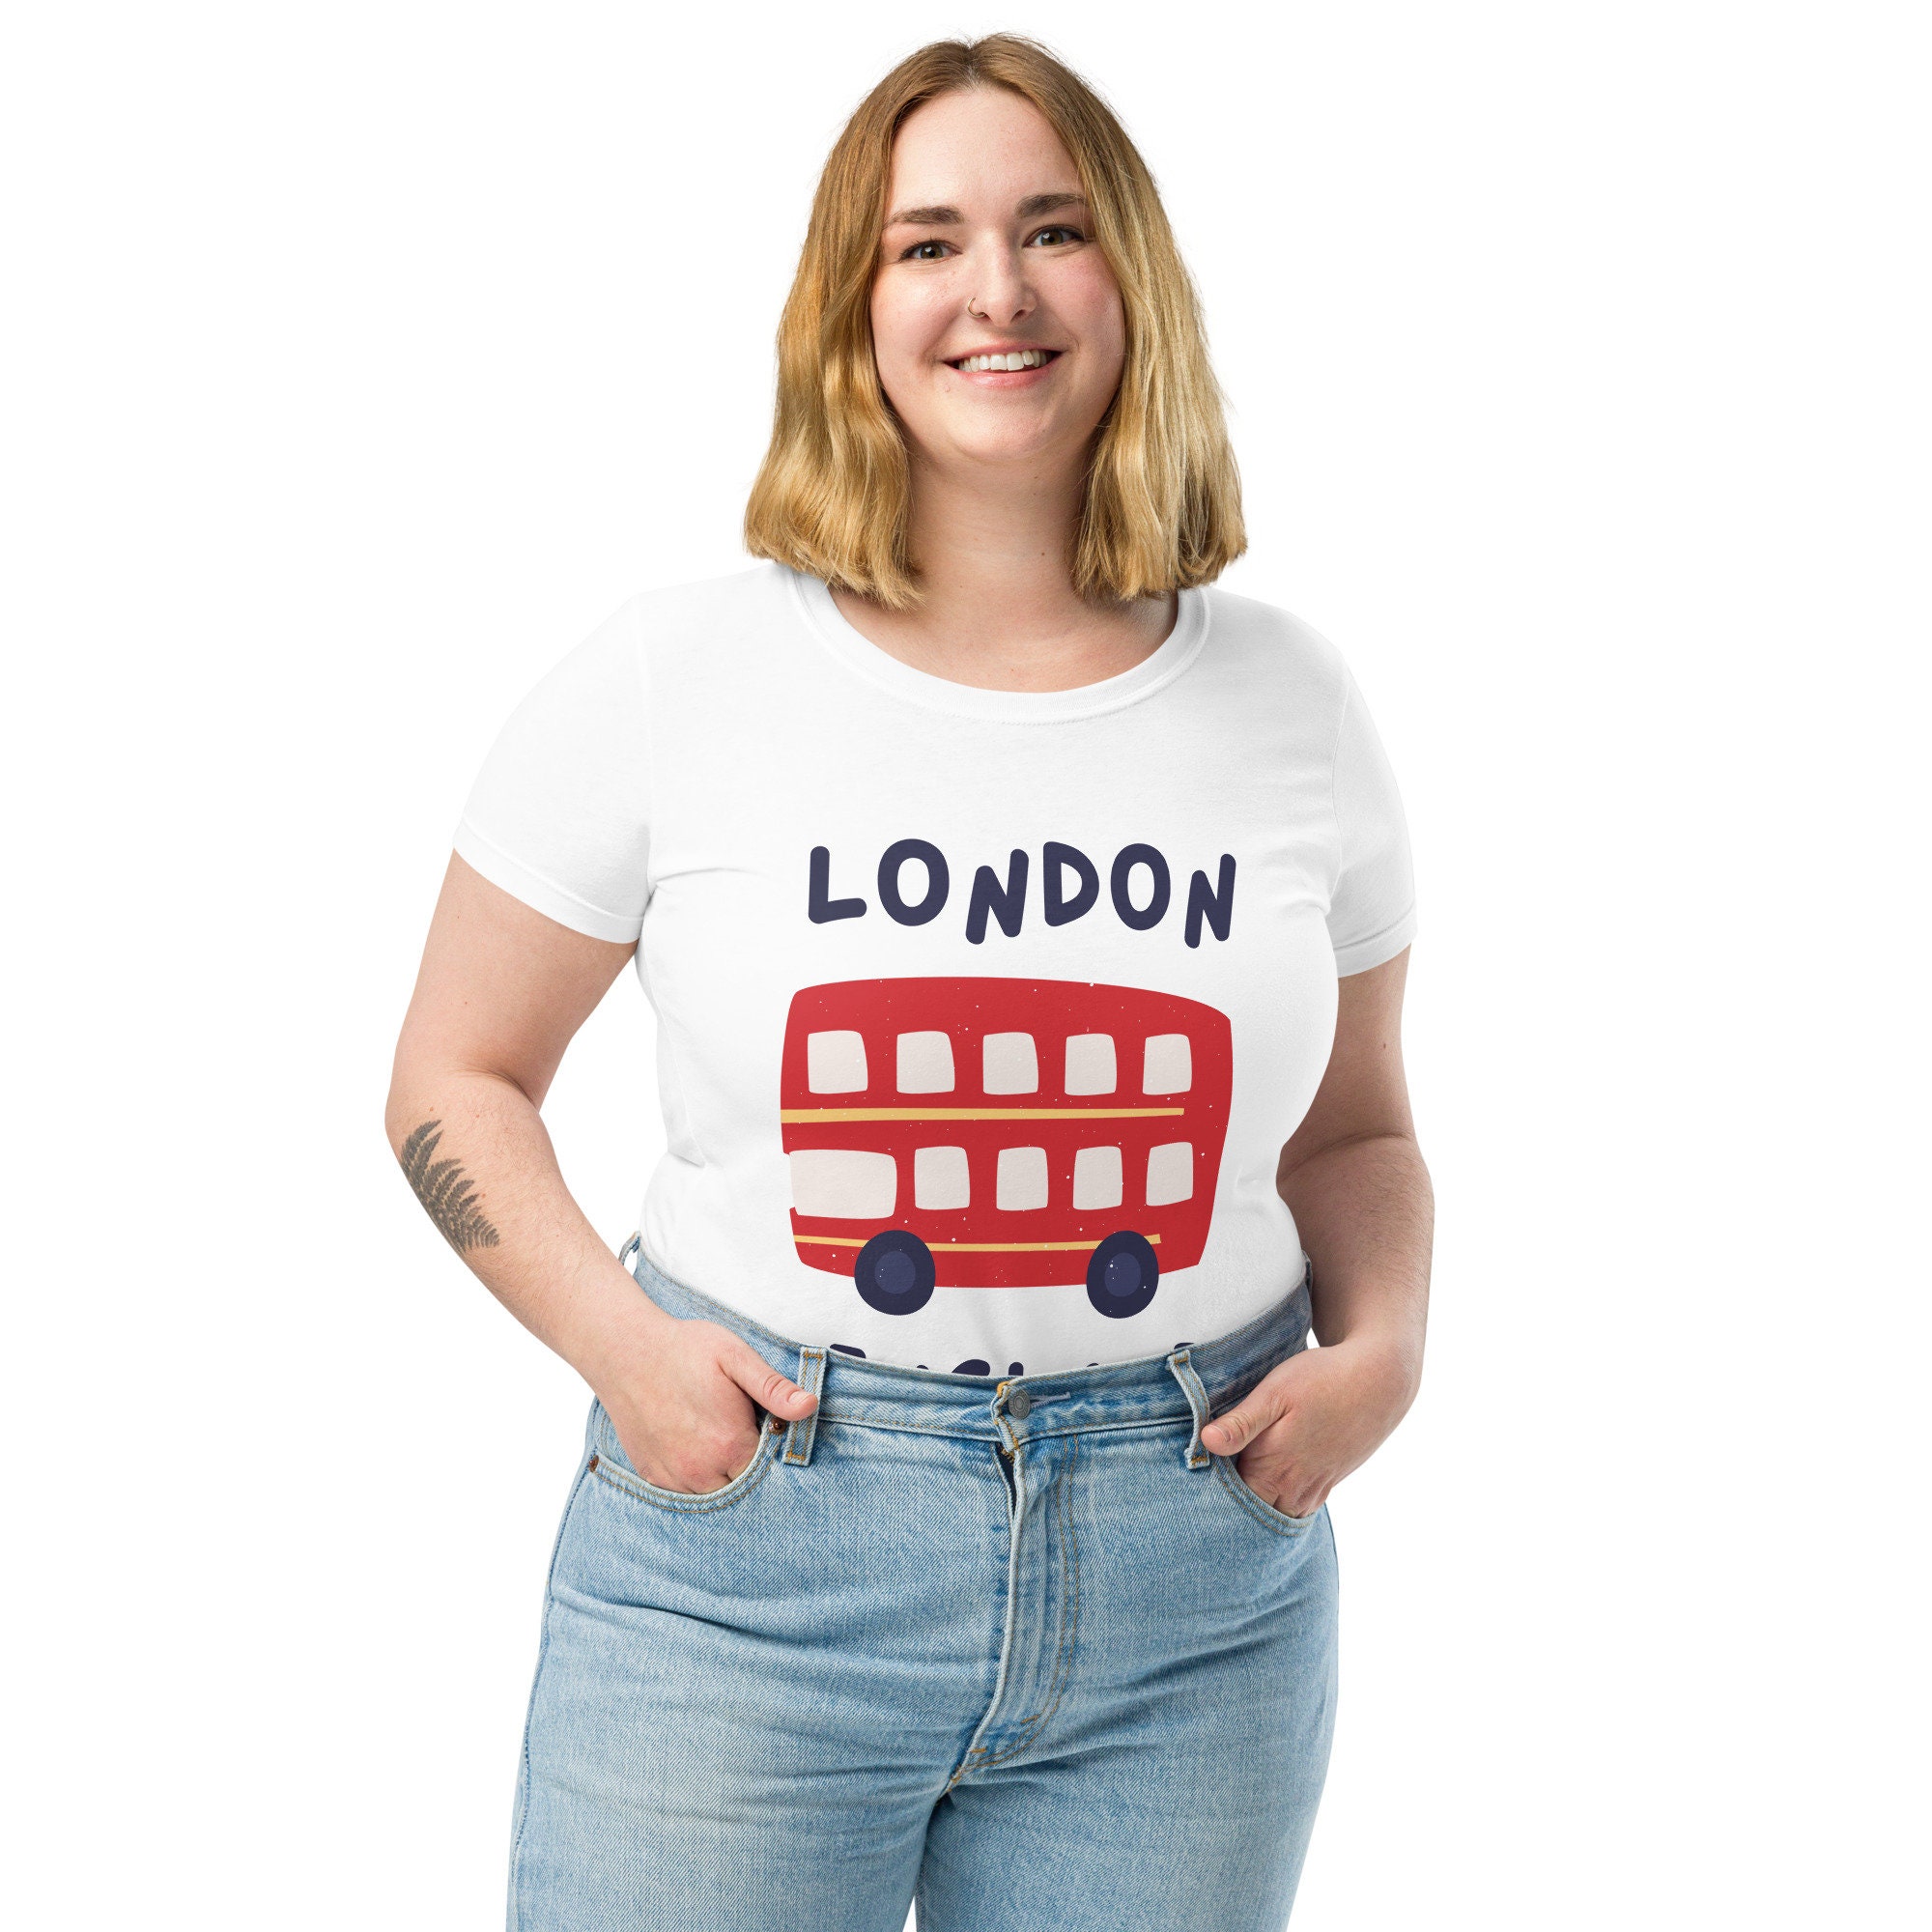 Discover London England London Bus Stop Printed Souvenir t-shirt